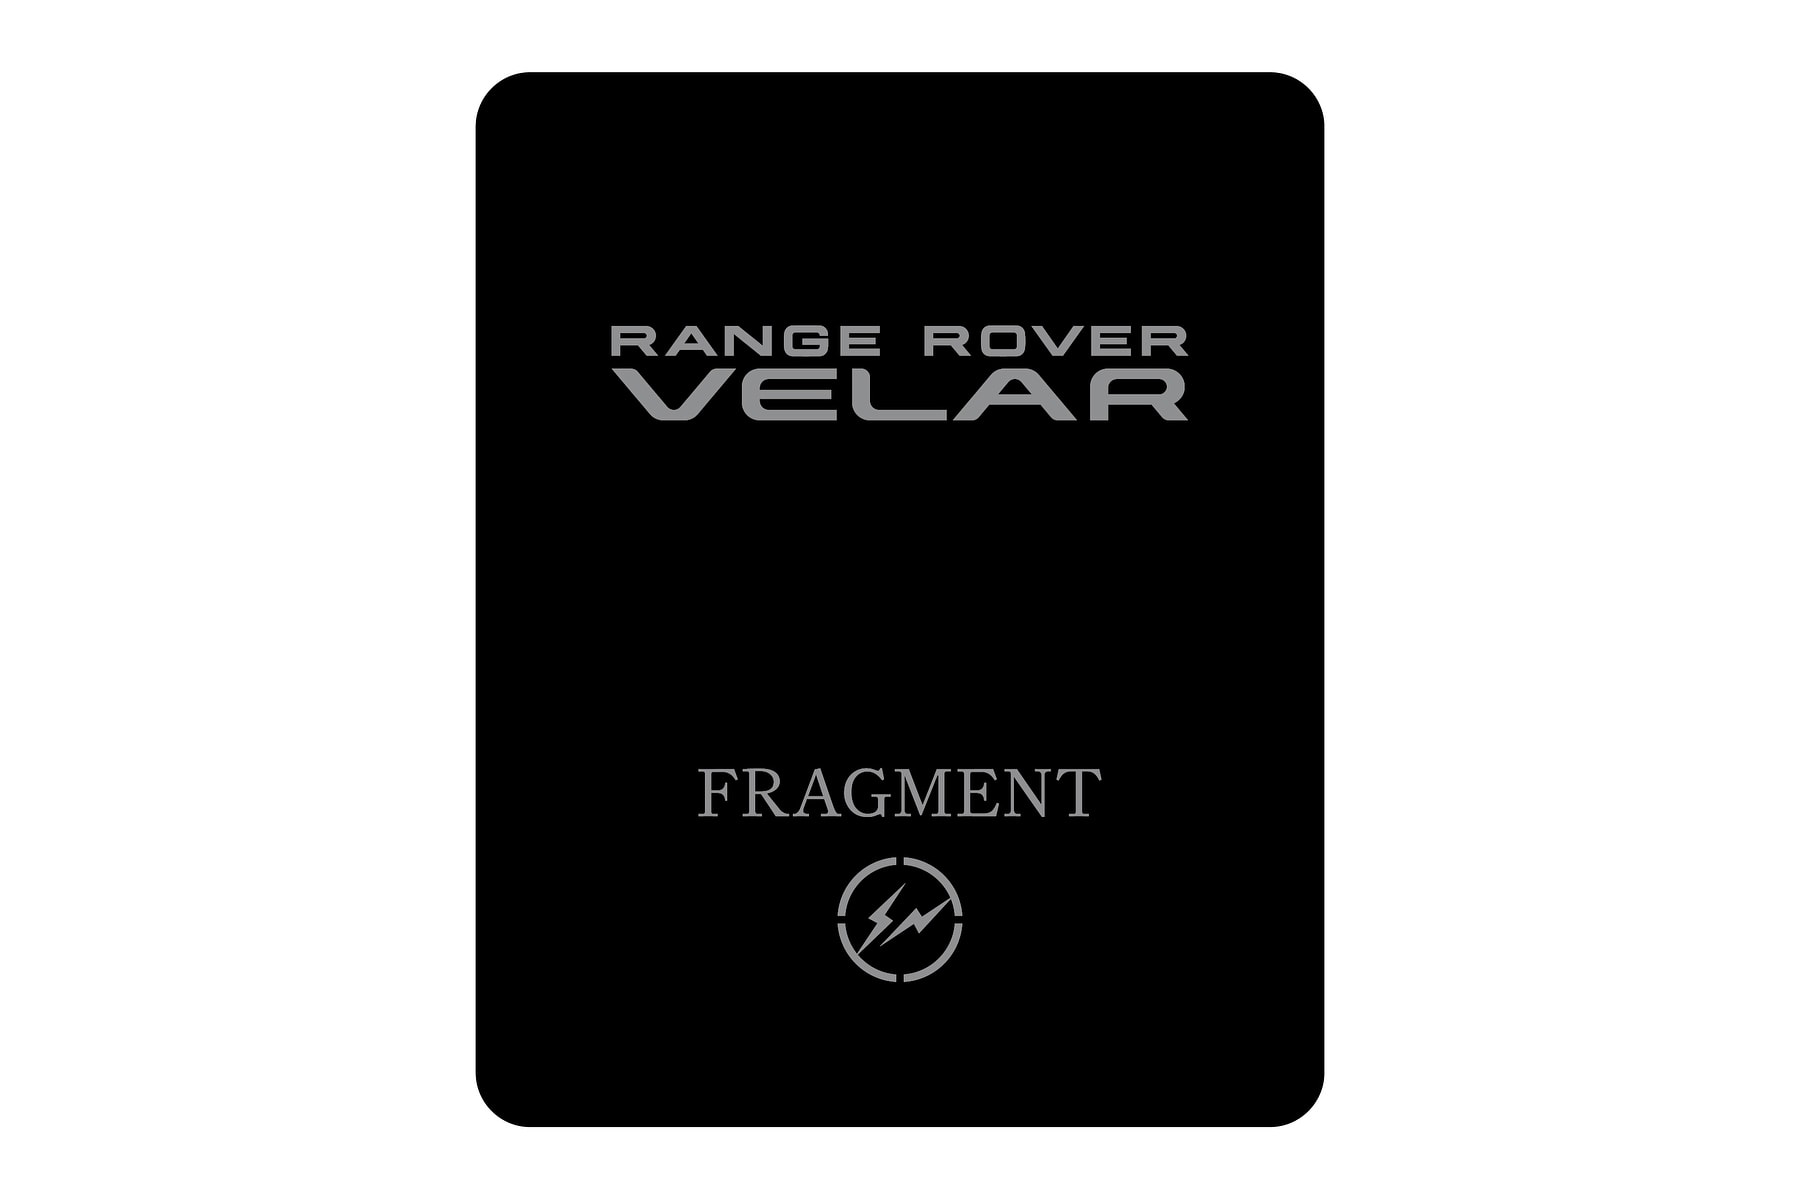 藤原浩以 fragment 之名策劃 Range Rover Velar 日本發佈活動